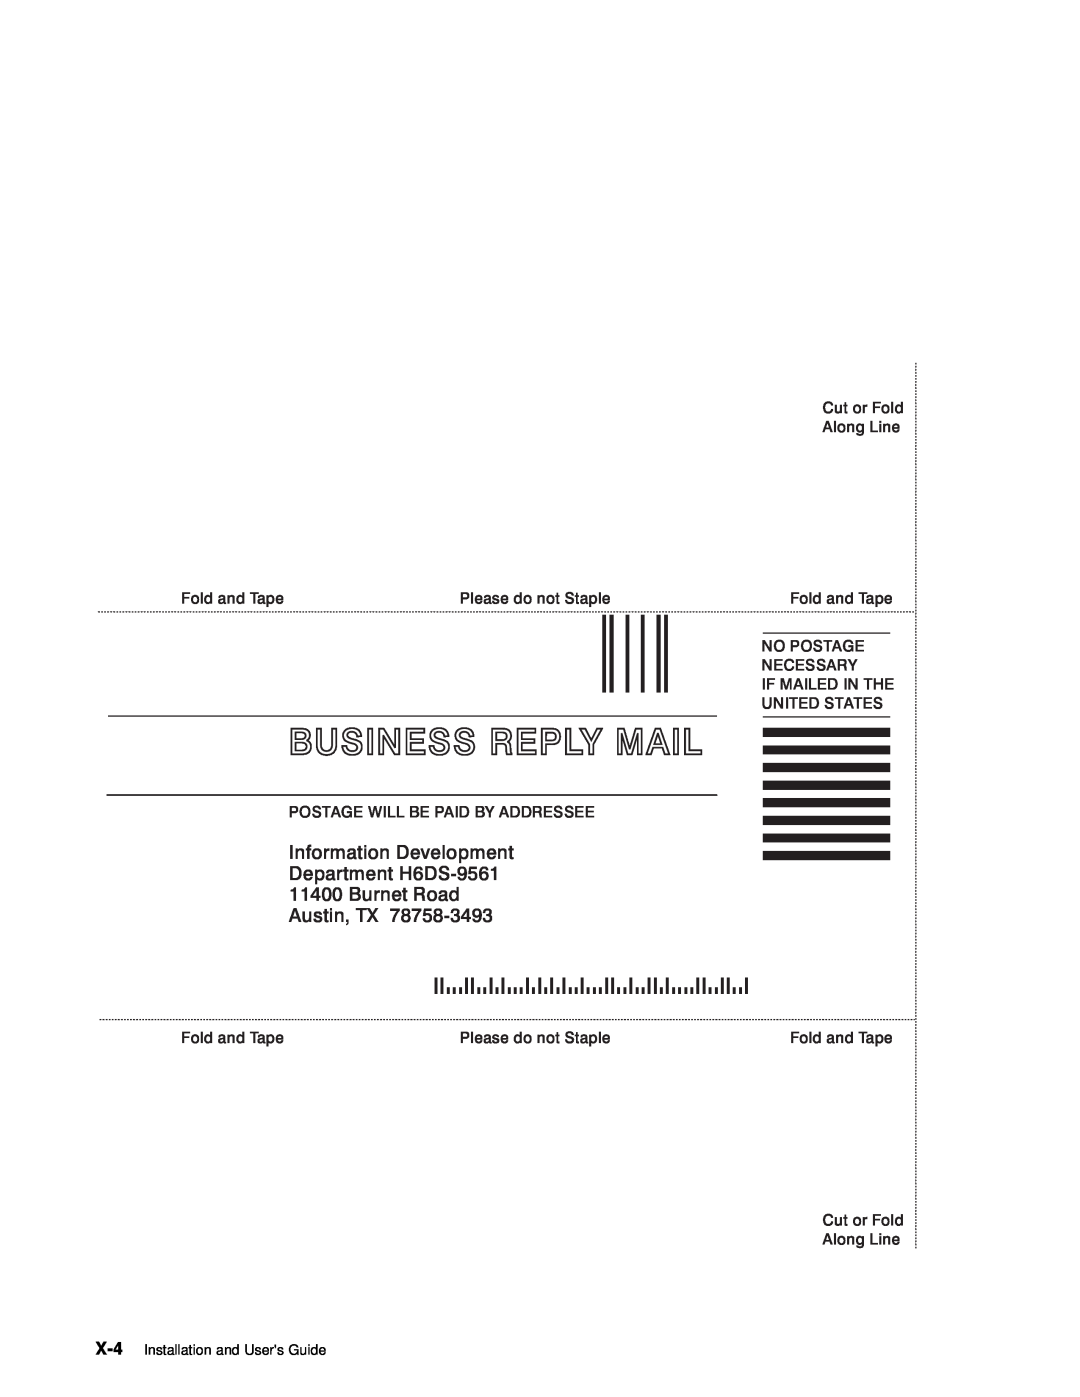 IBM ARTIC960RxD manual Business Reply Mail, Information Development Department H6DS-9561 11400 Burnet Road, Austin, TX 